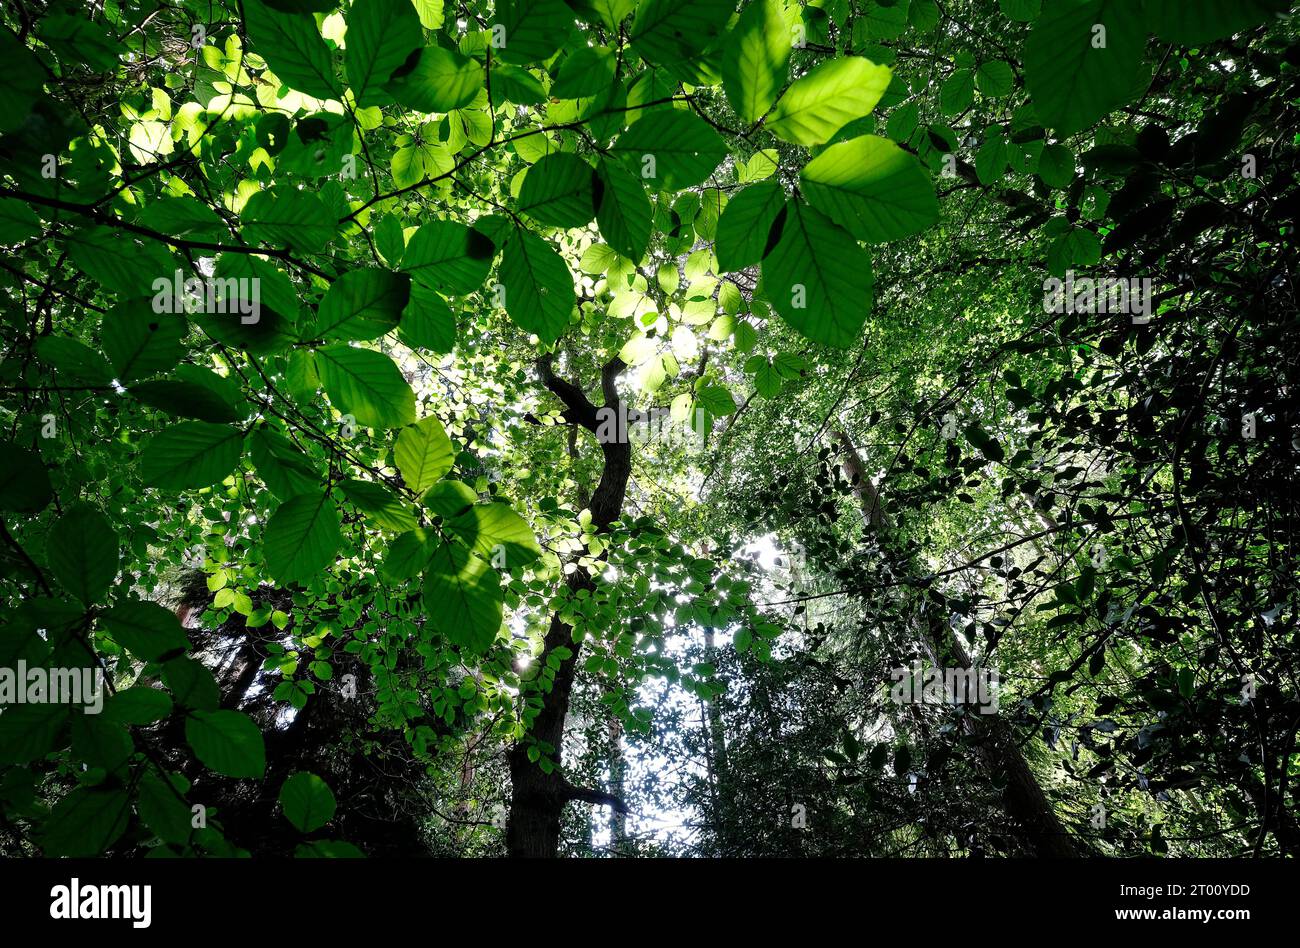 foglie verdi nella scena boschiva, norfolk, inghilterra Foto Stock